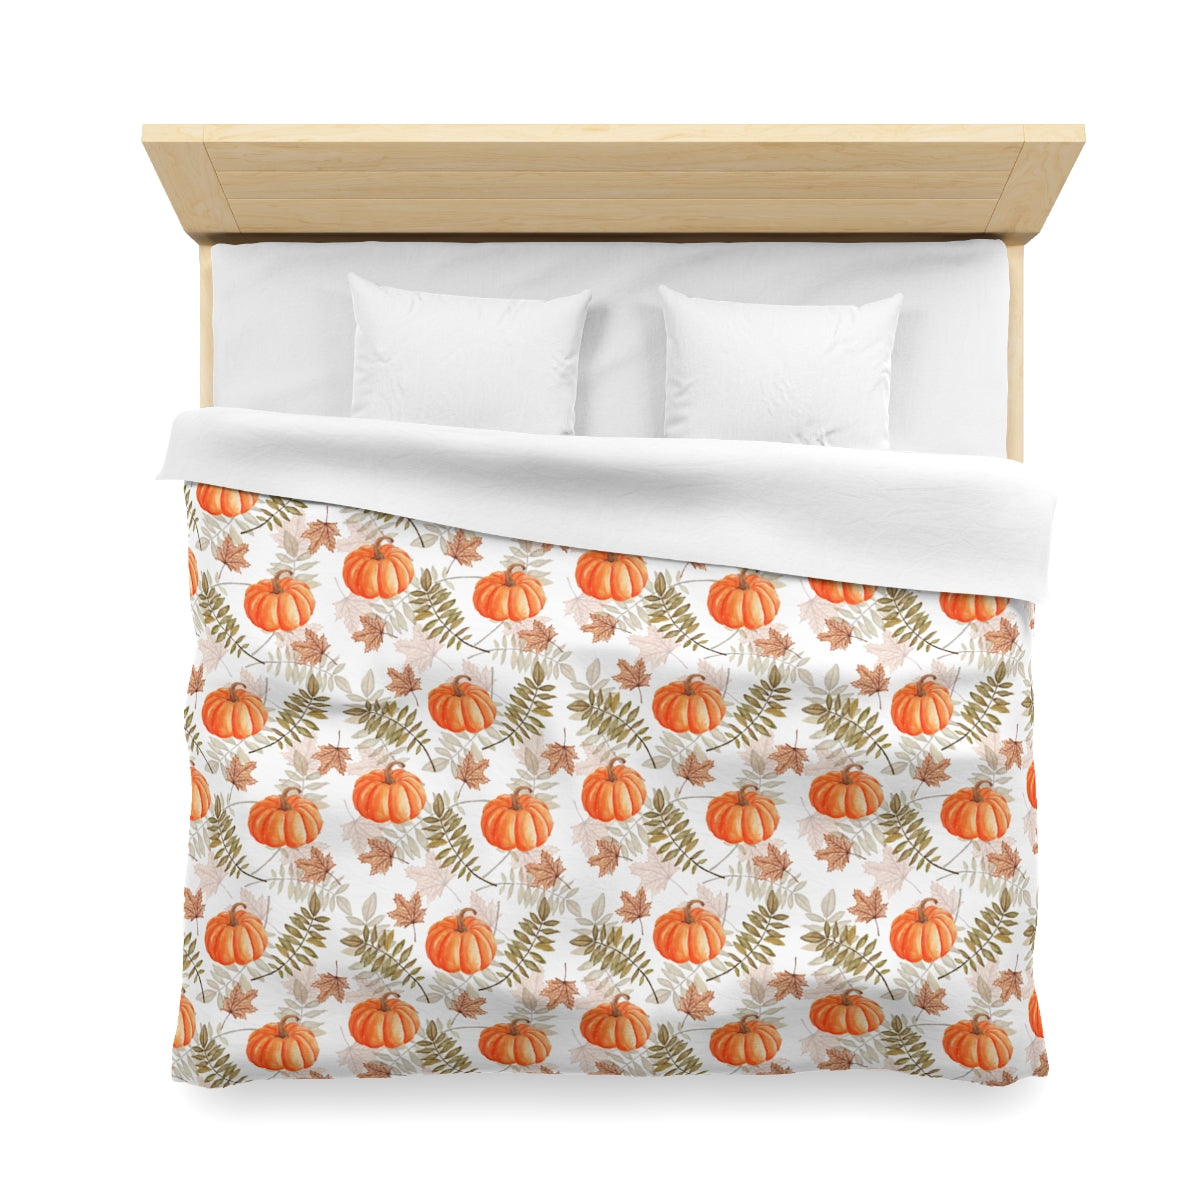 Pumpkin Duvet Cover, Fall Autumn Leaves Orange Bedding Queen King Full Twin XL Microfiber Designer Bed Quilt Bedroom Decor Starcove Fashion